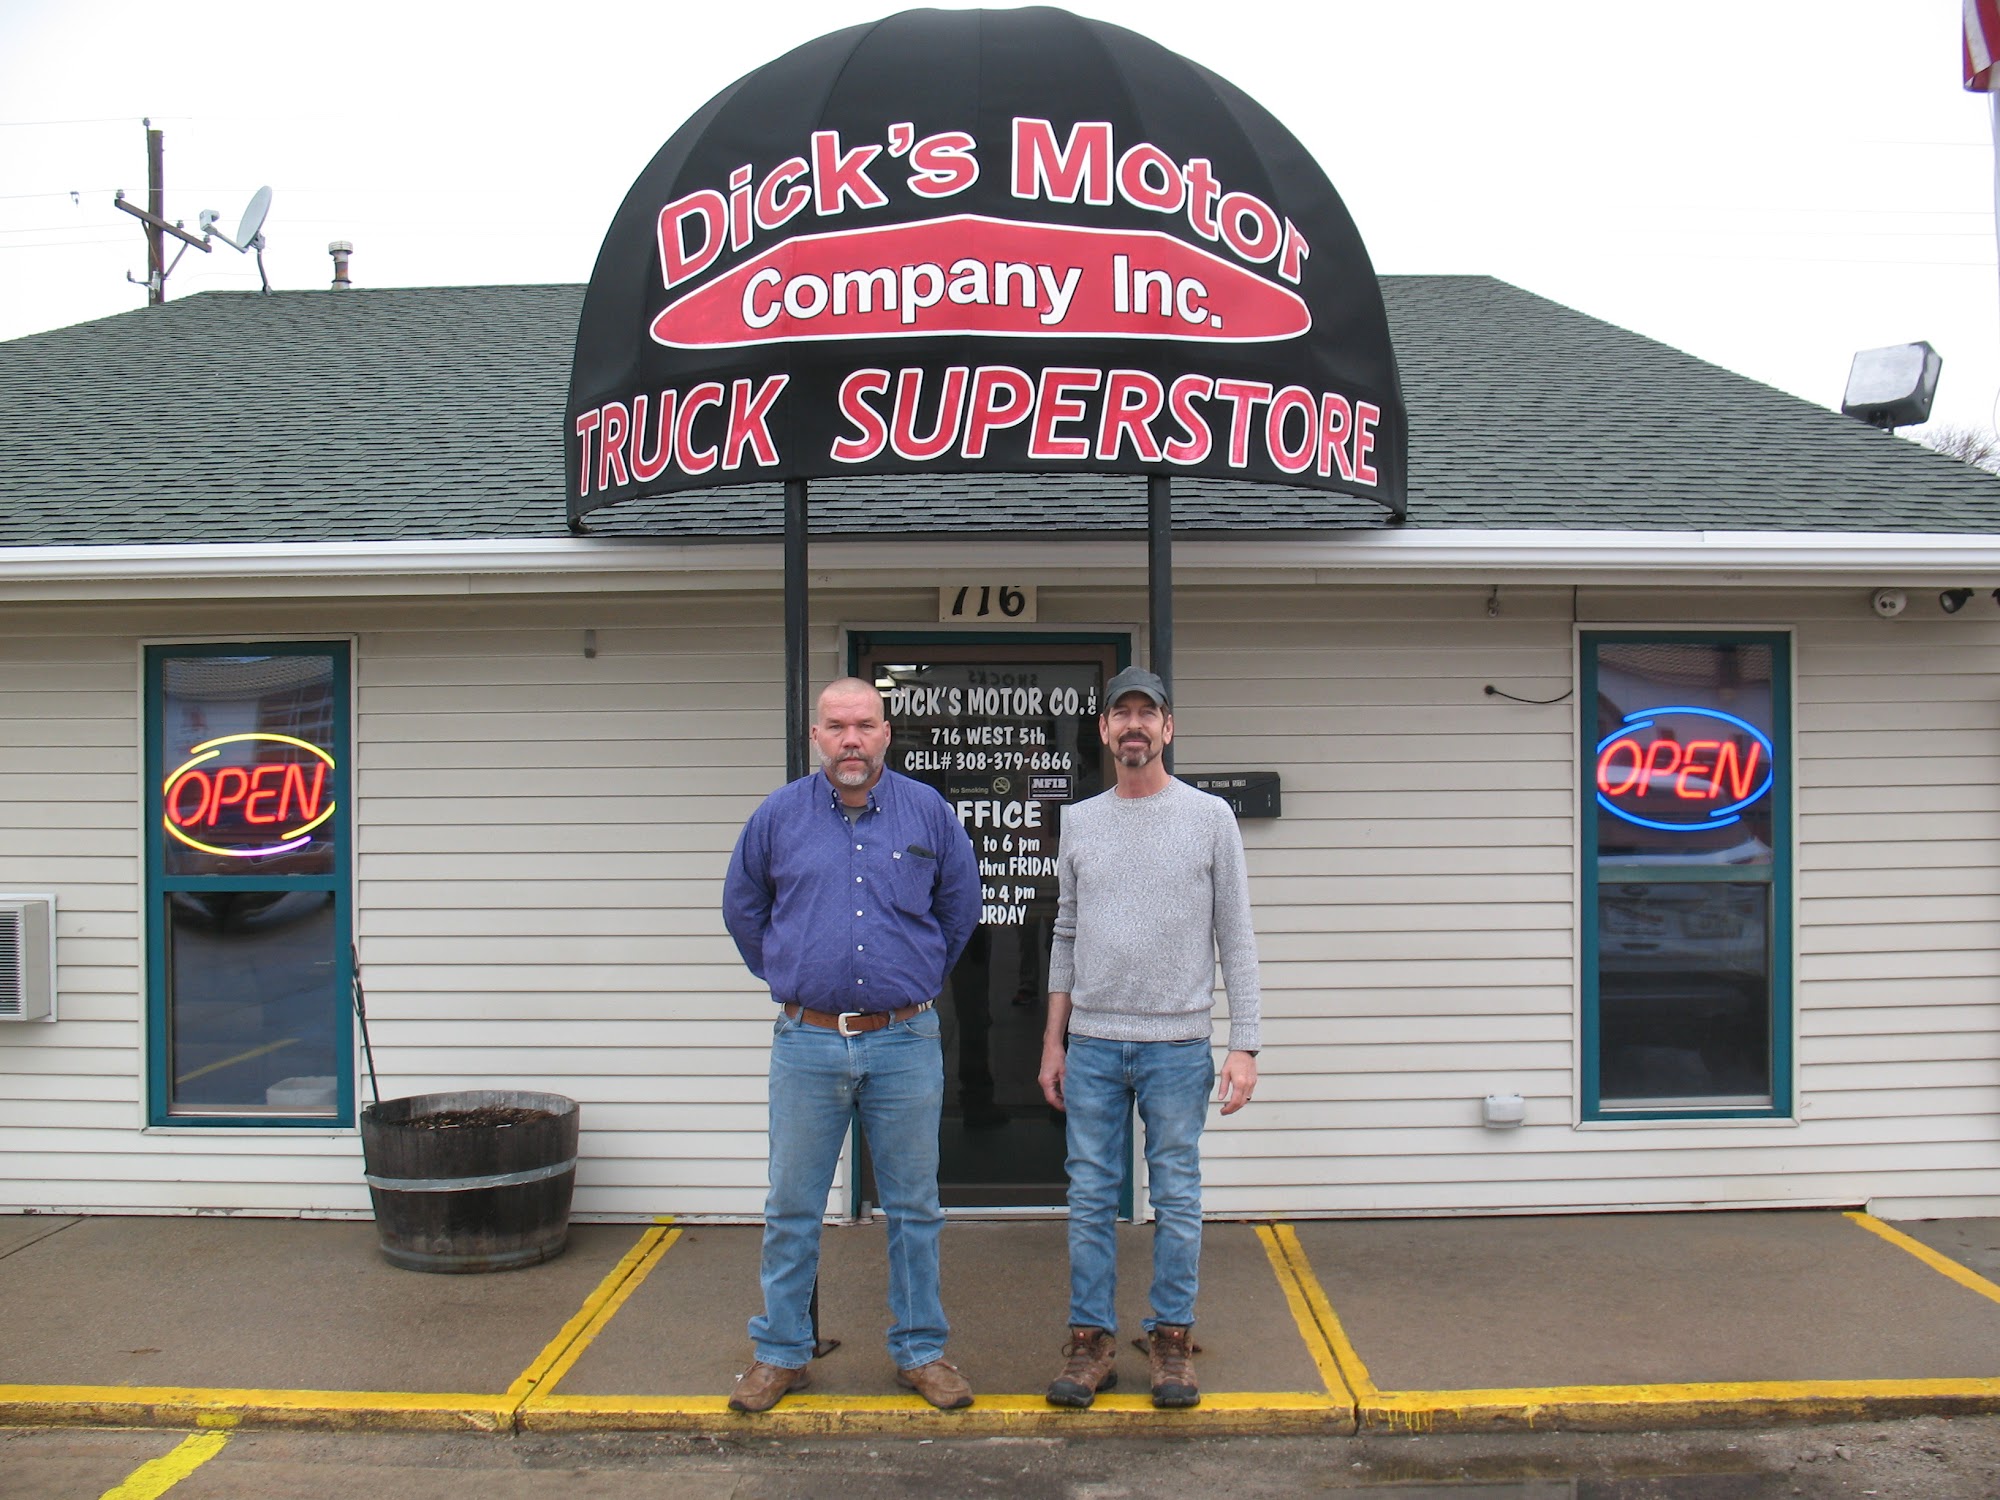 Dick's Motor Company Inc.